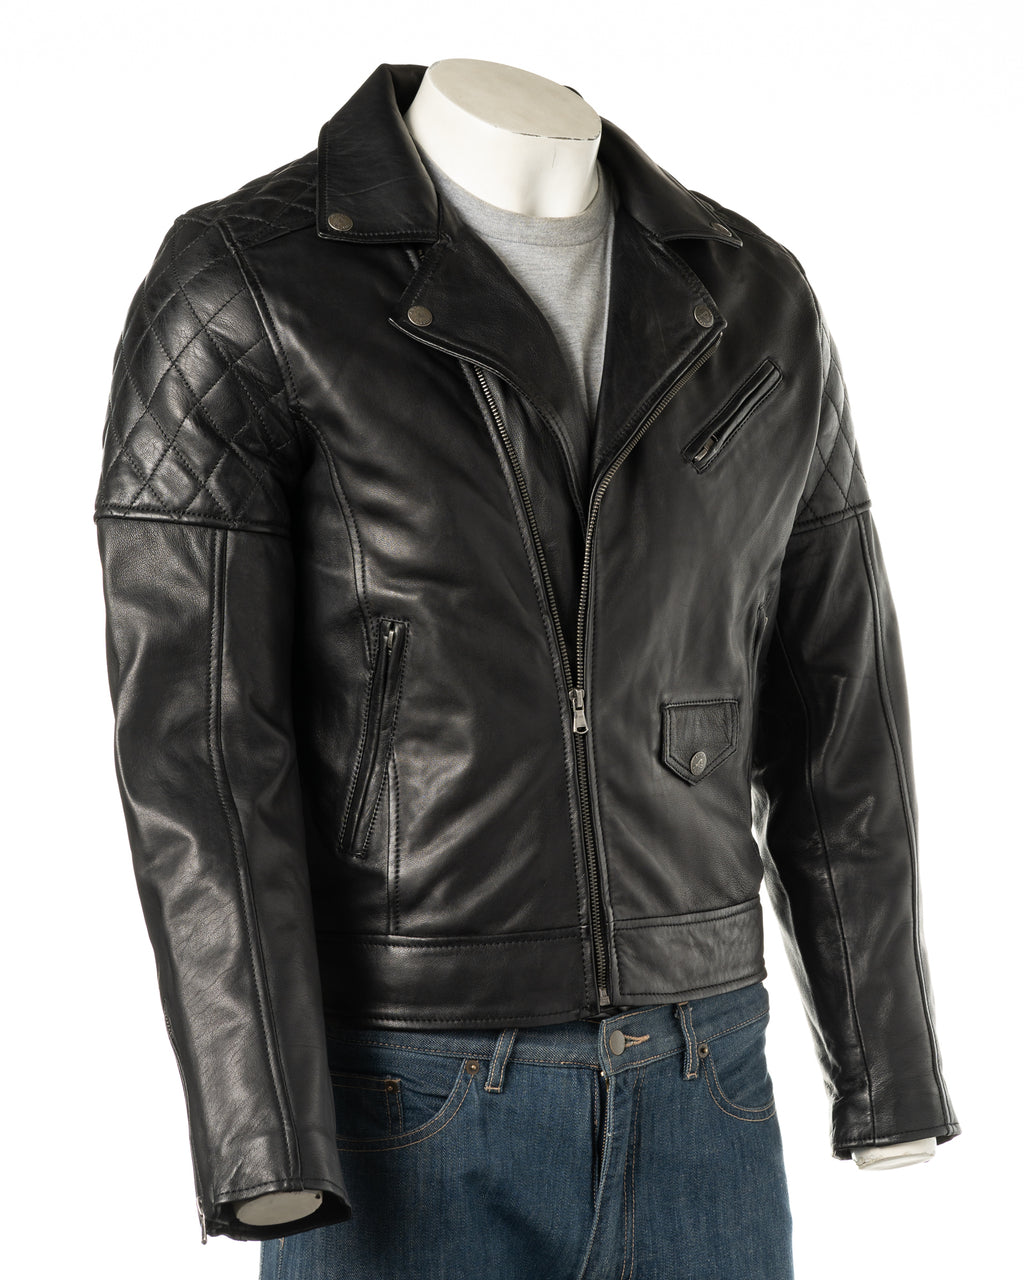 Men's Black Vintage Look Biker Style Leather Jacket: Gaetano